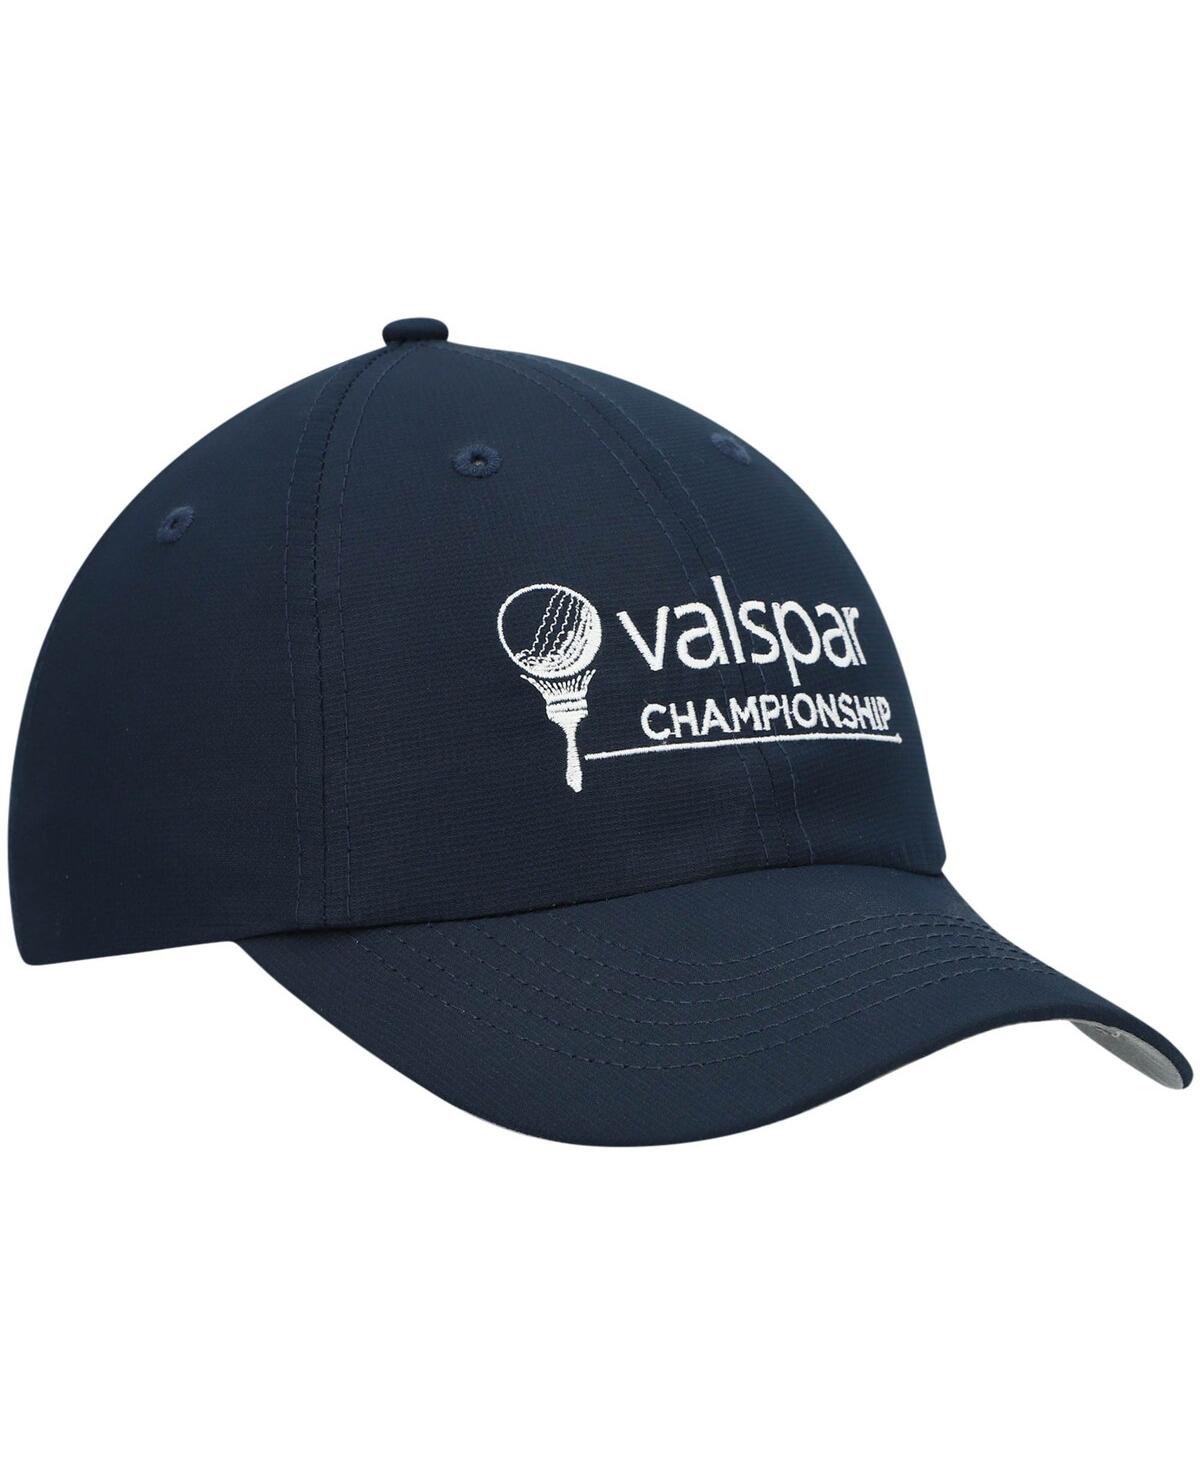 Shop Imperial Women's  Navy Valspar Championship Original Performance Adjustable Hat